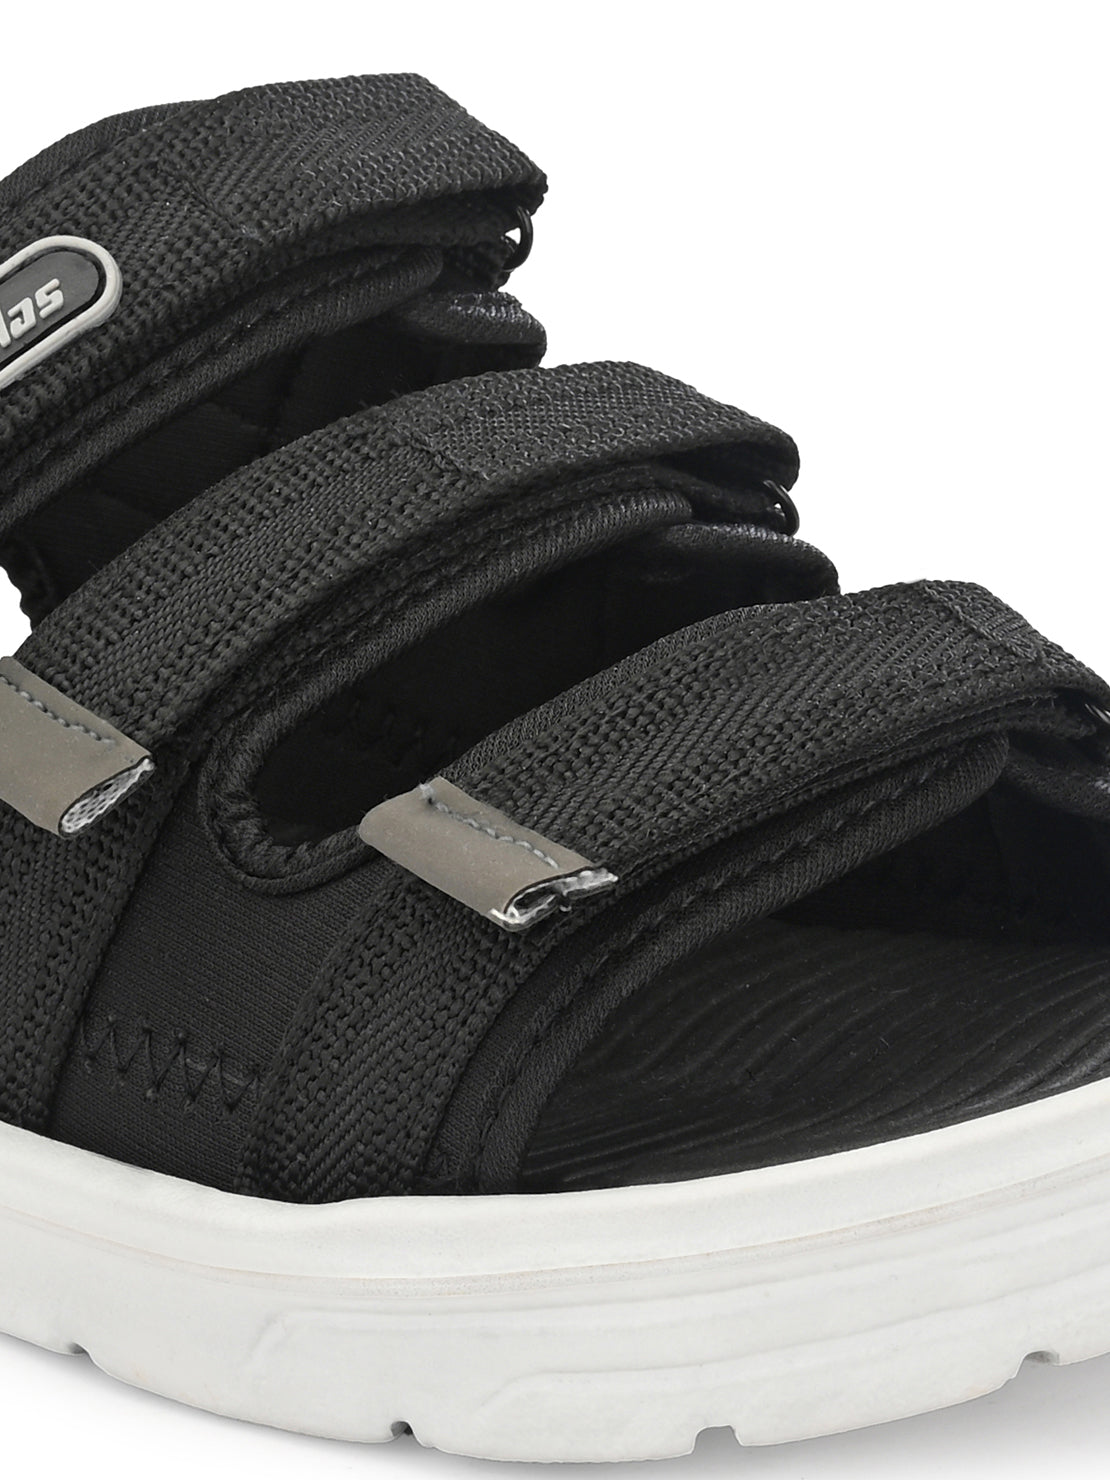 Hirolas® Men's Black Fashion Floater Sports Sandal (HROFF23BLK)